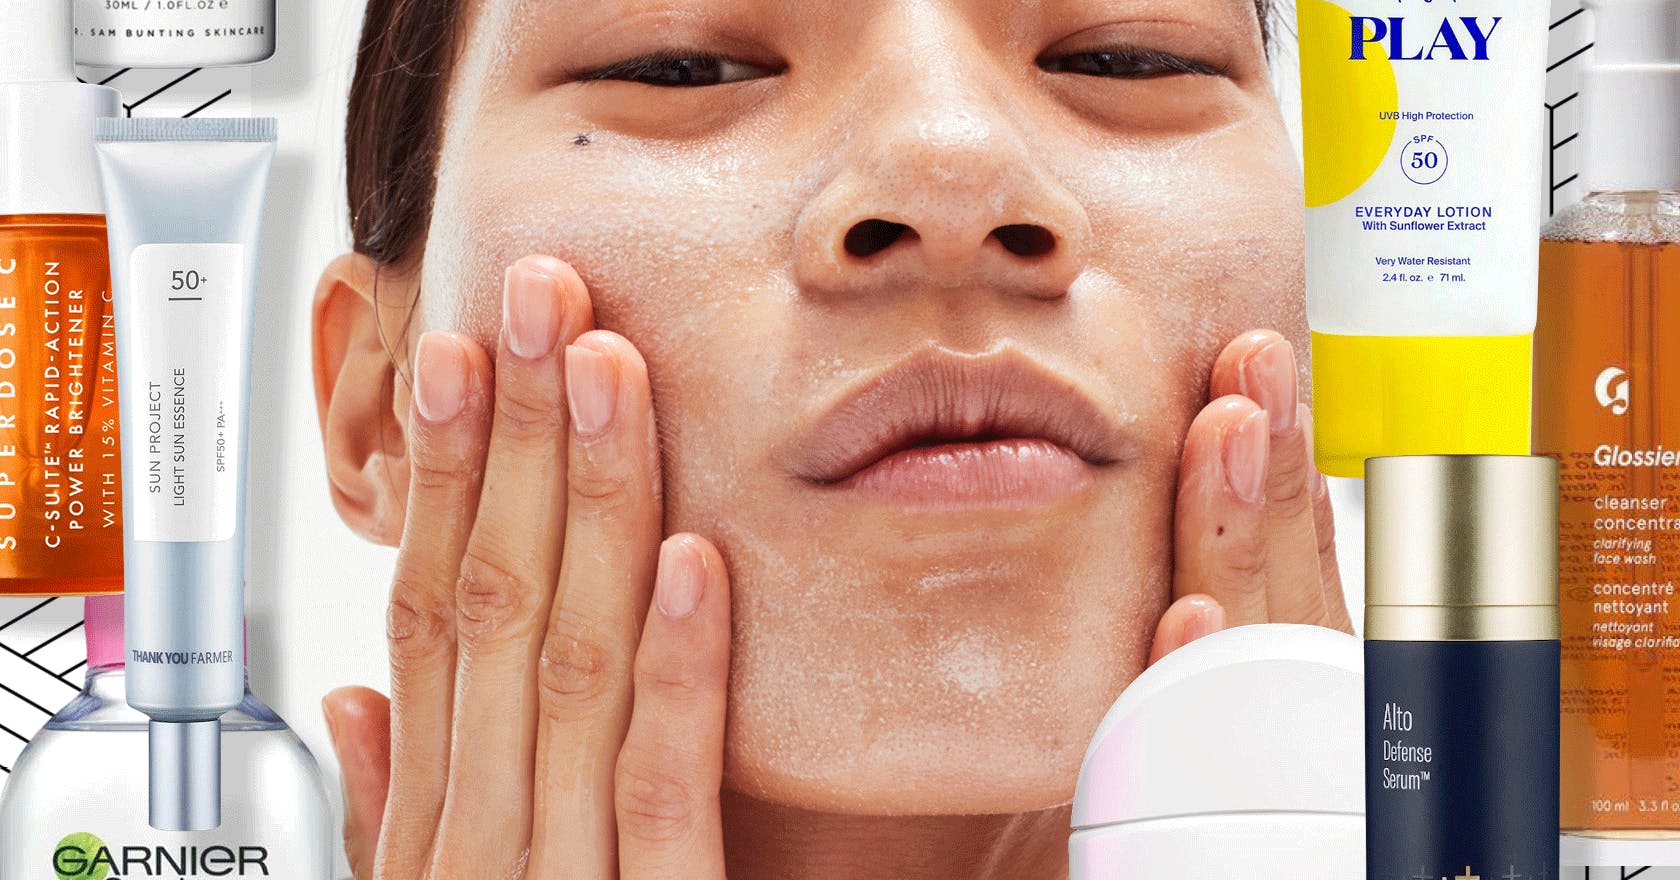 Easy skincare routine: cleanser, antioxidant serum, sunscreen